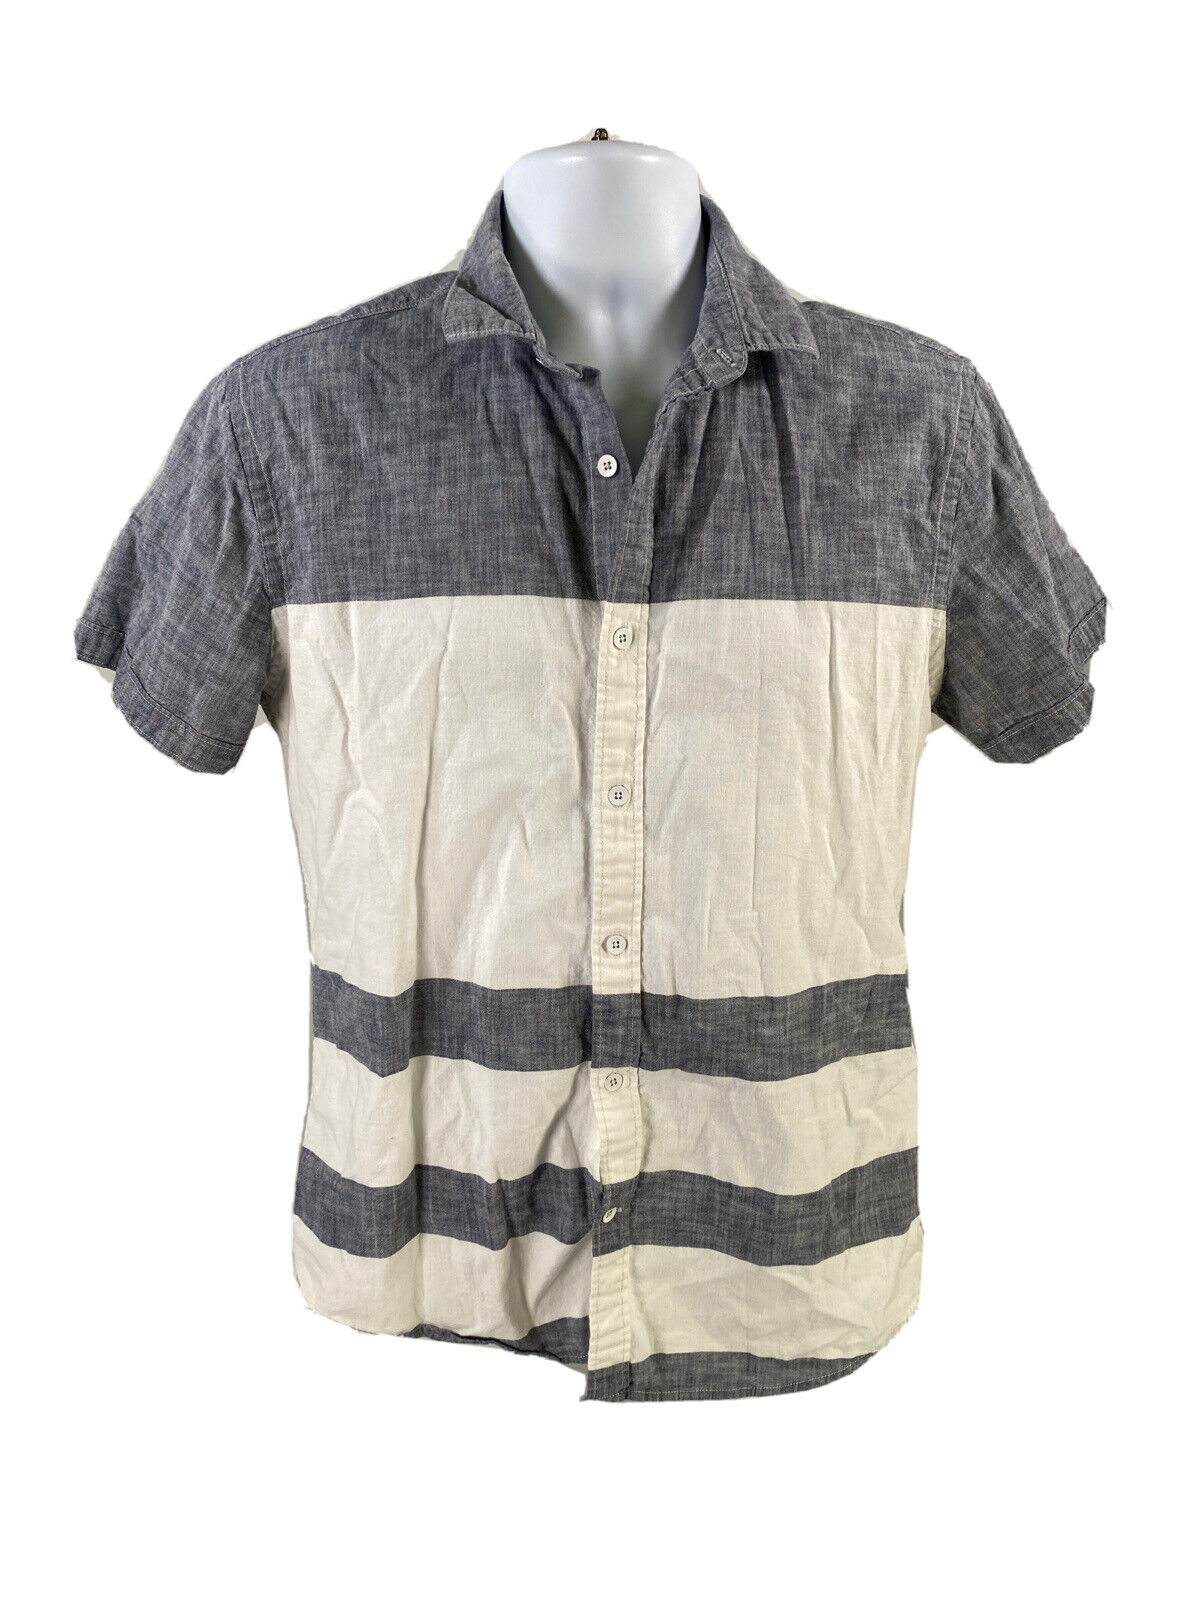 Express Men's Blue/White Soft Wash Short Sleeve Button Up Casual Shirt -M